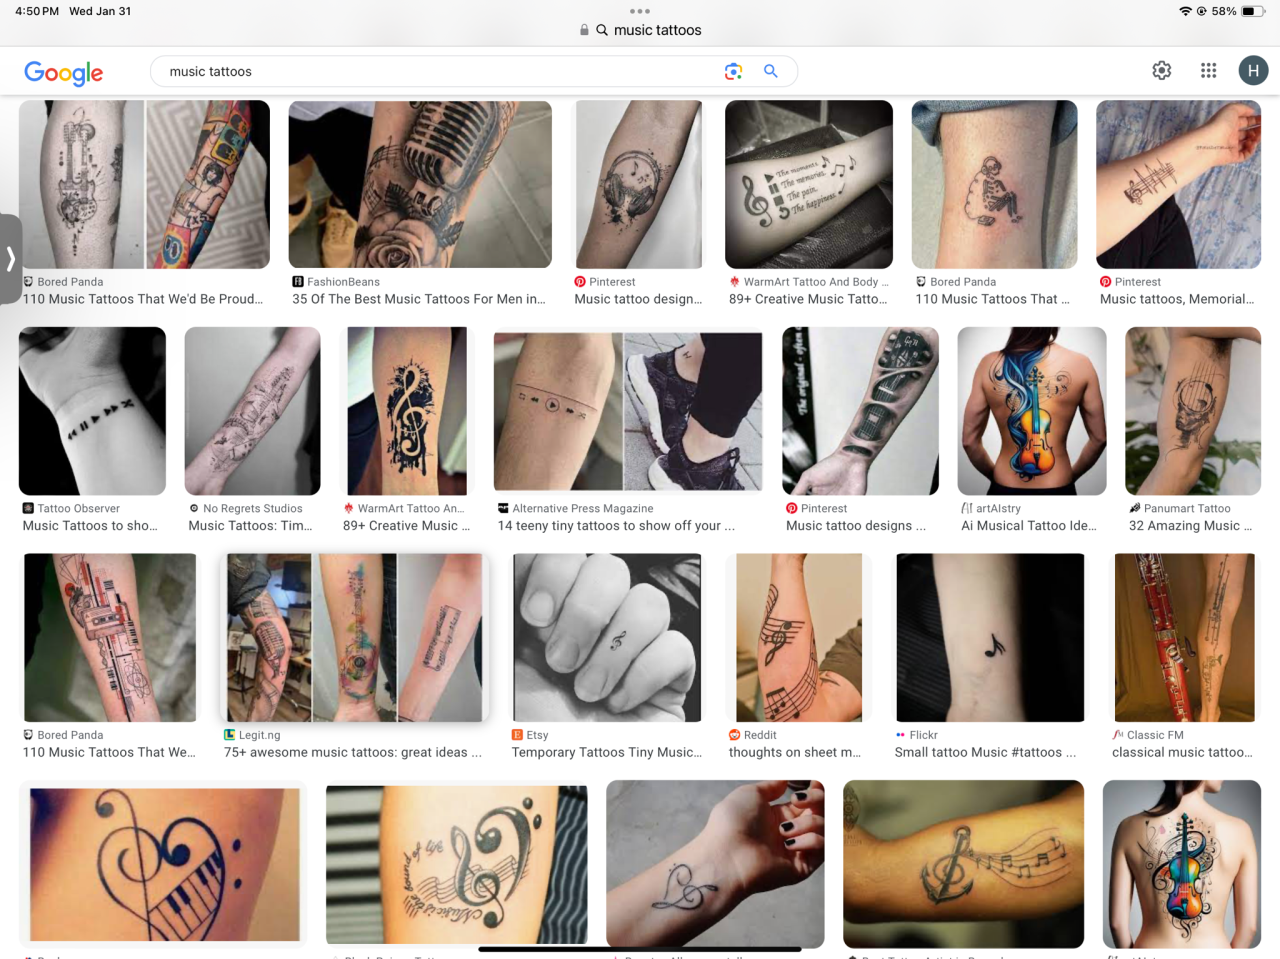 Cool Halloween Tattoo Ideas - Spooky, Cute, and Totally Cool - tattooglee |  Halloween tattoos, Cute halloween tattoos, Spooky tattoos